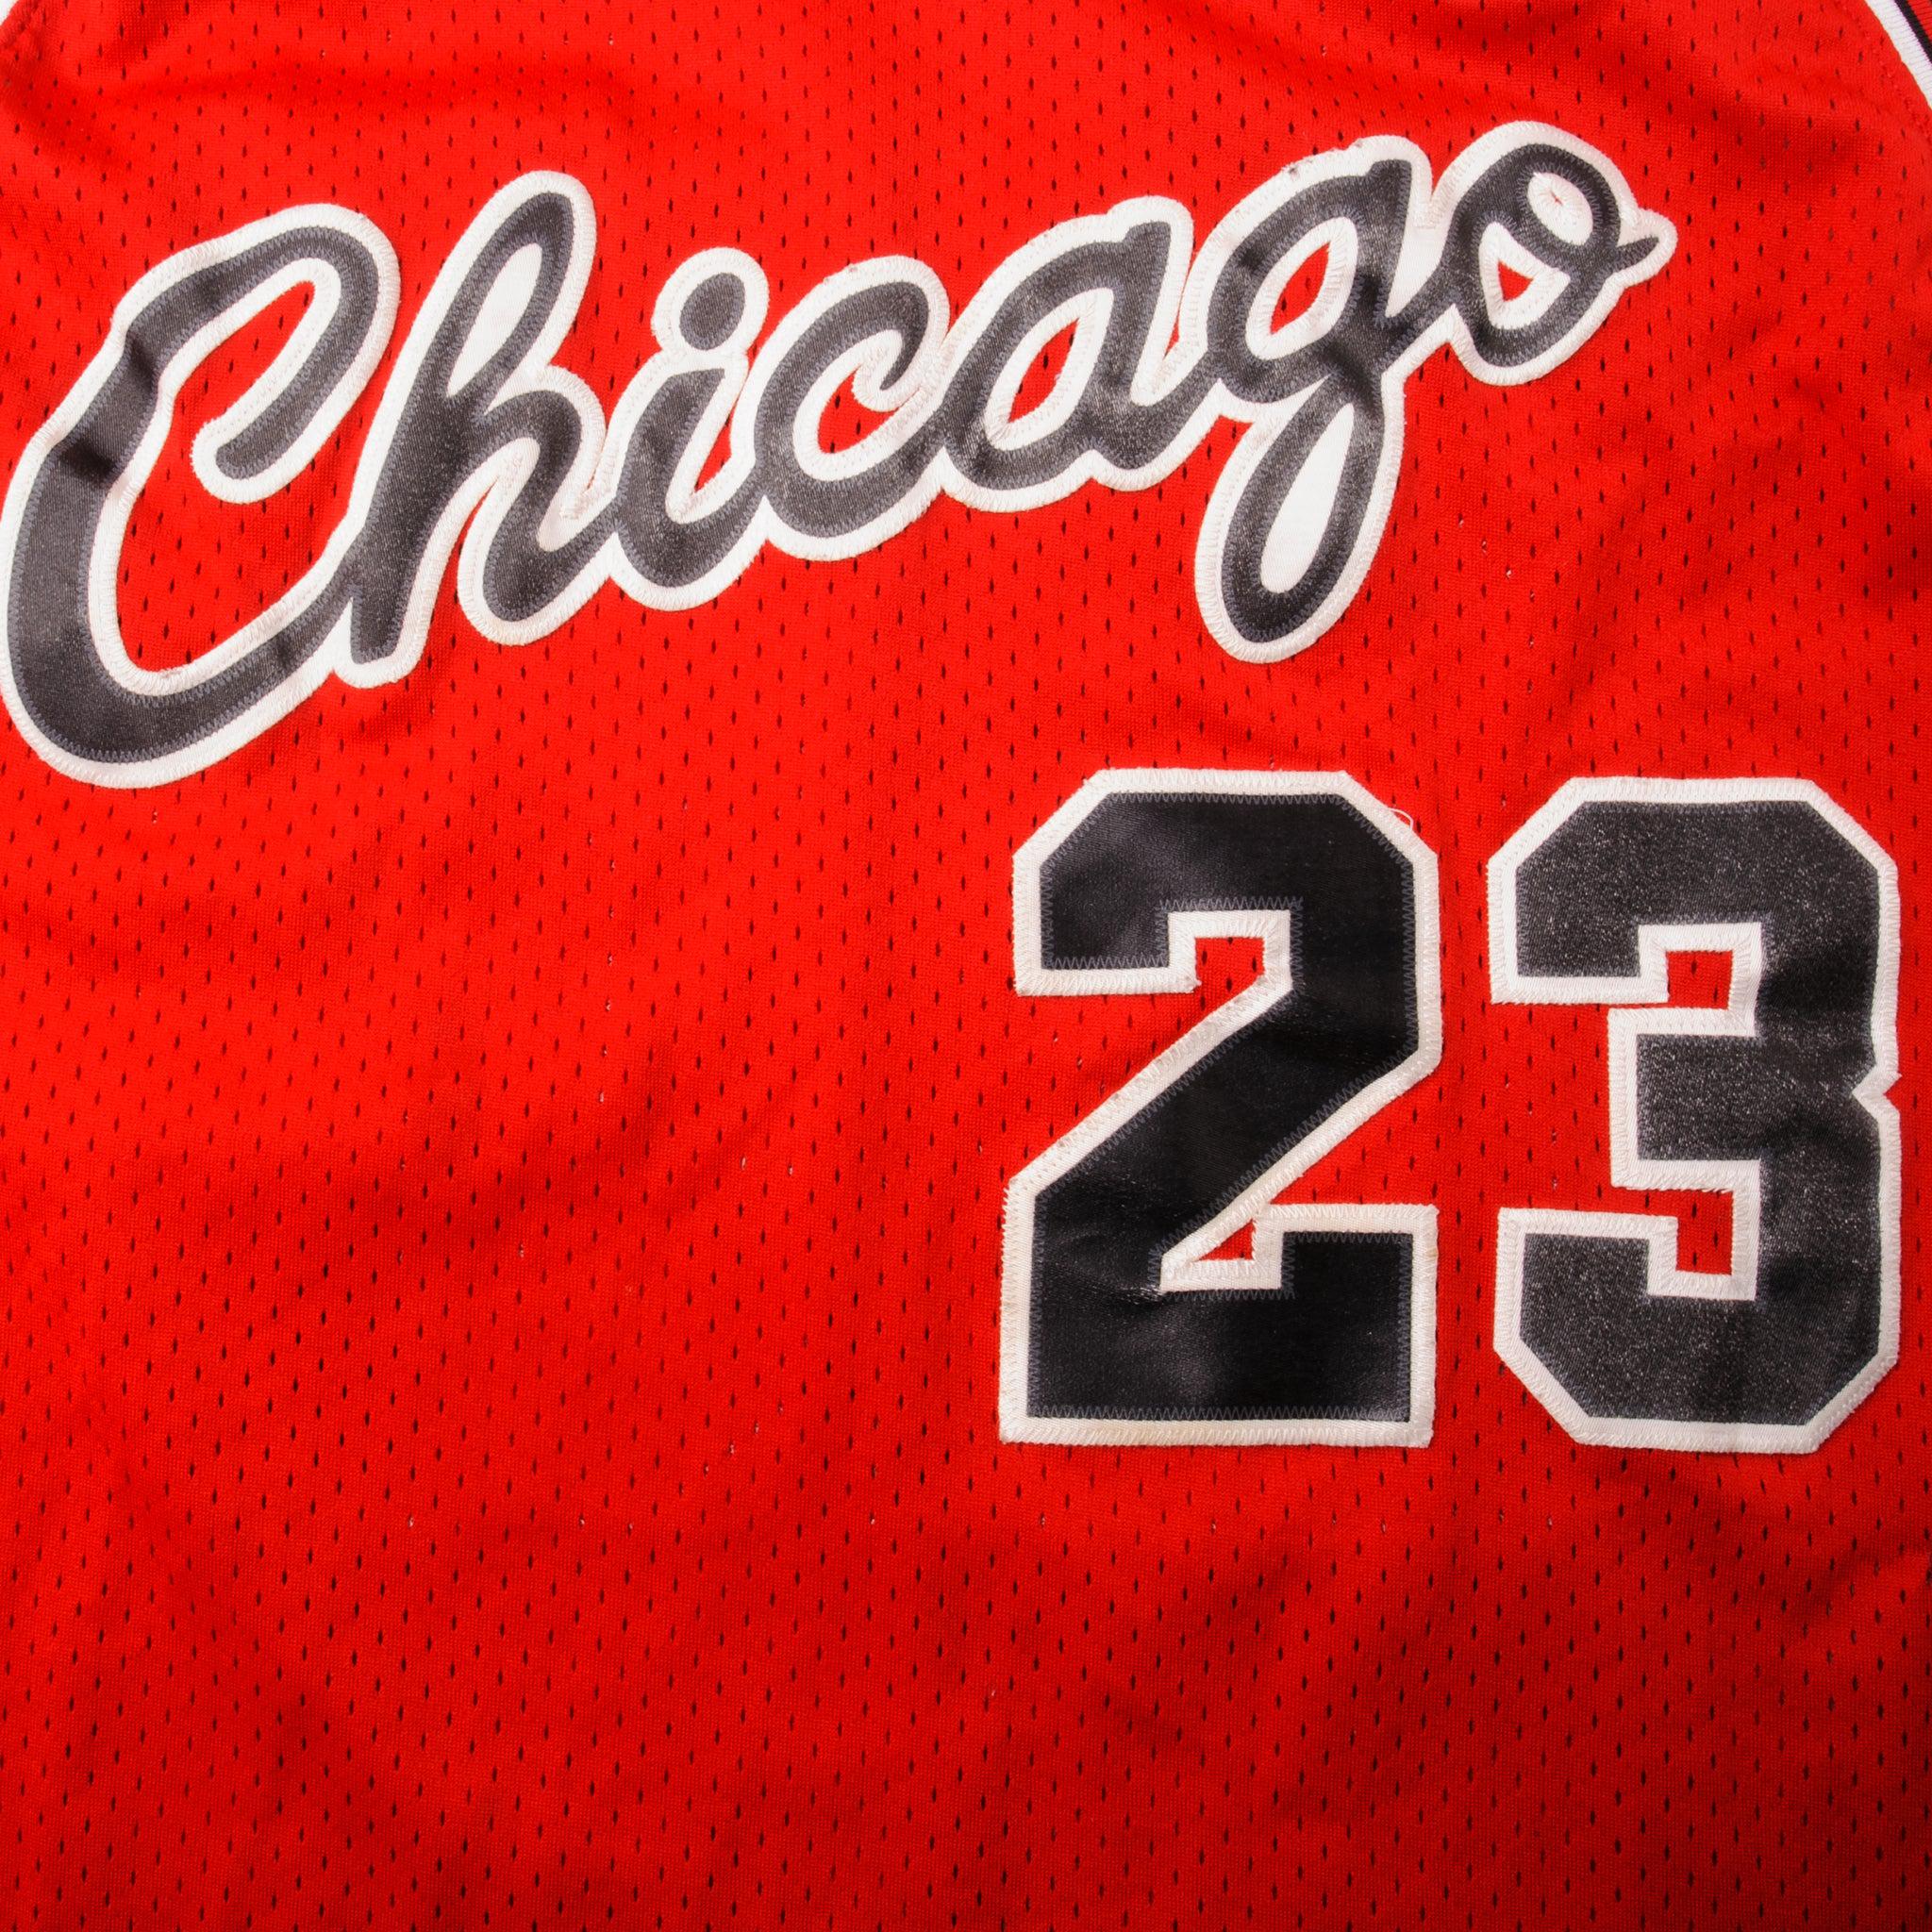 GOAT BUSINESS Michael Jordan Chicago Bulls Jersey Size Large Michael Jordan  Chic…